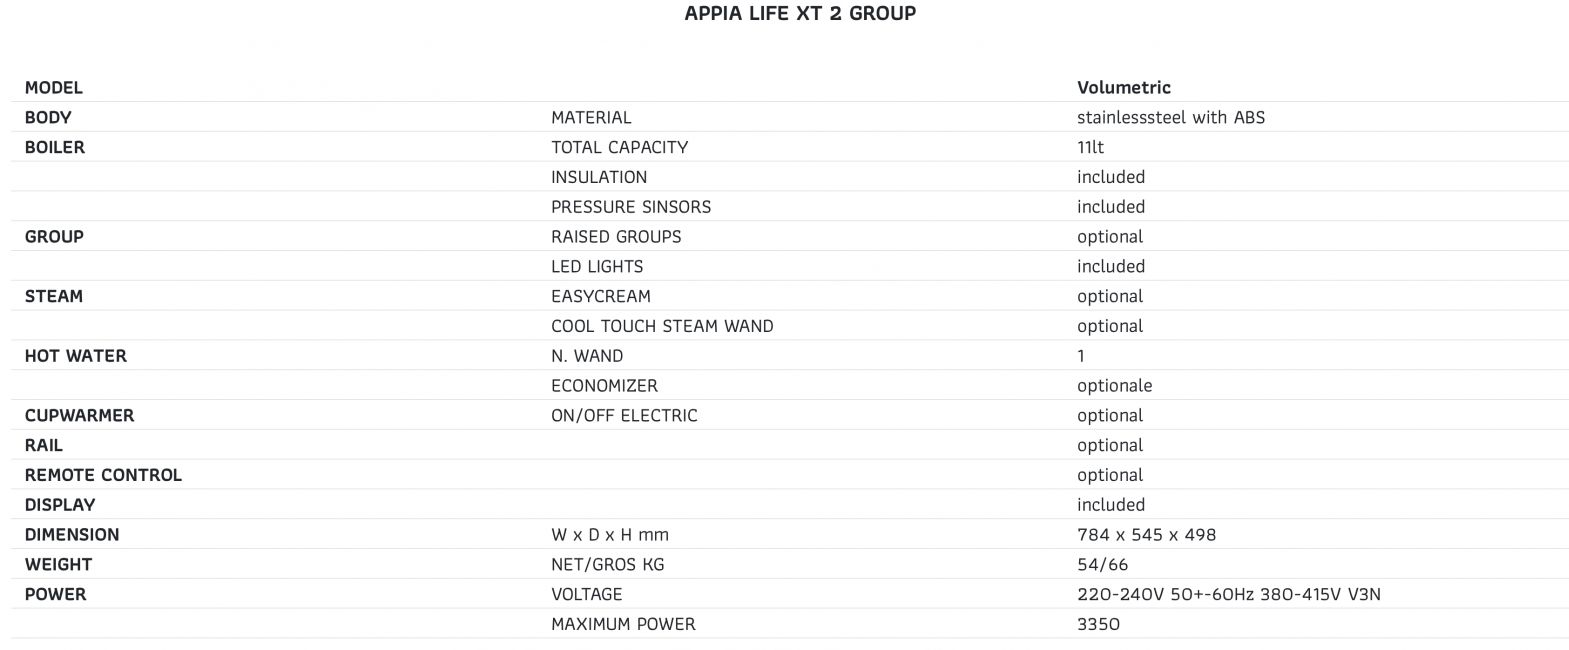 Appia Life XT 2 Group Easy Cream